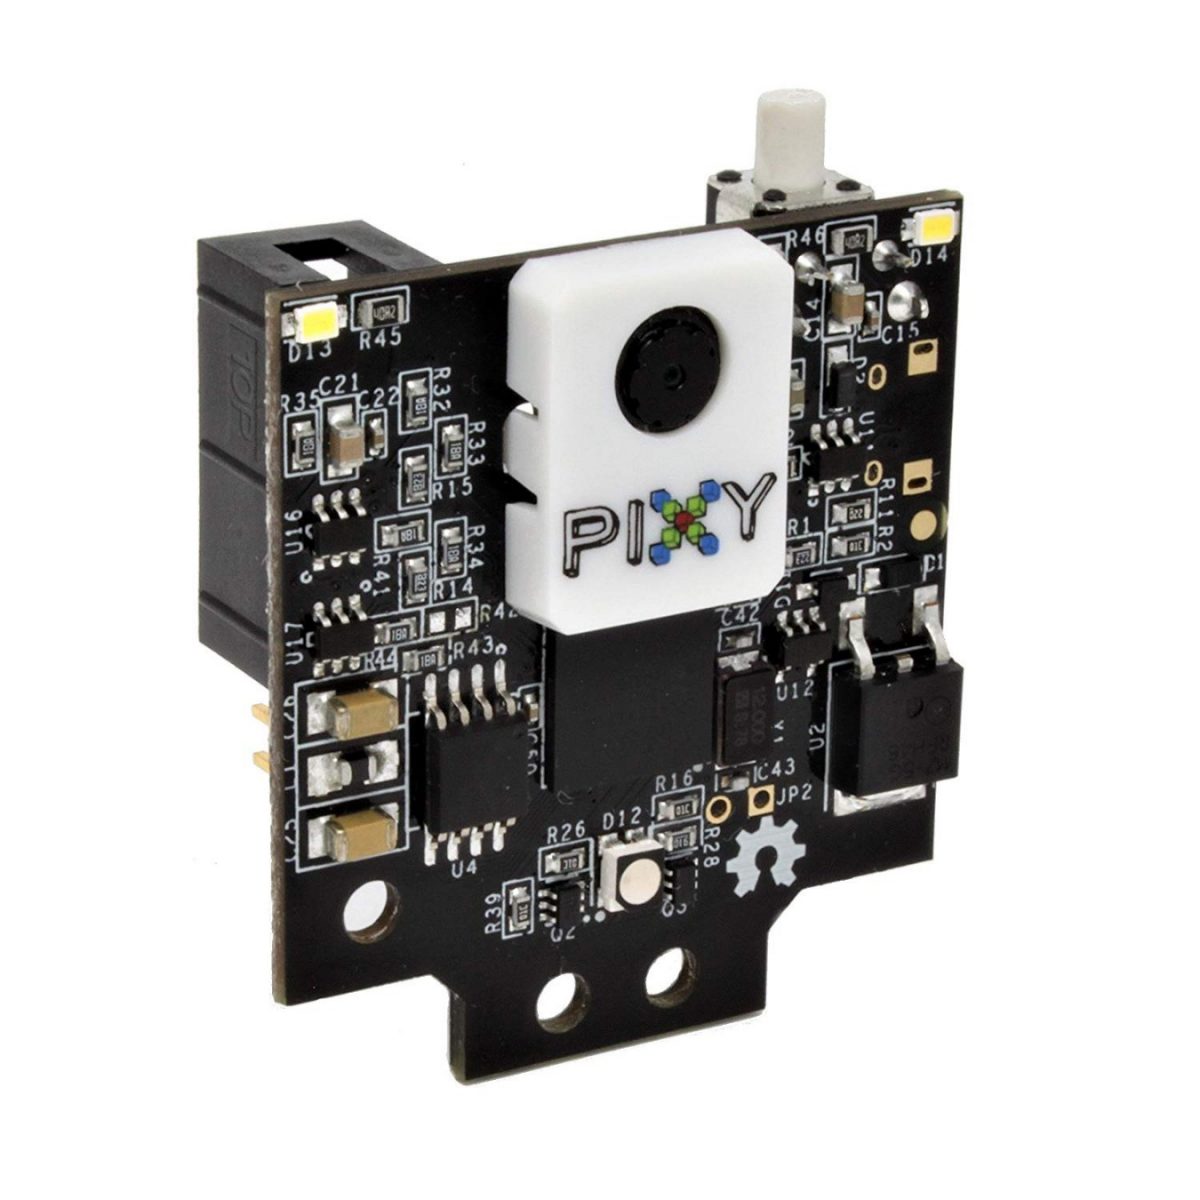 Pixy2 Κάμερα για Mindstorms